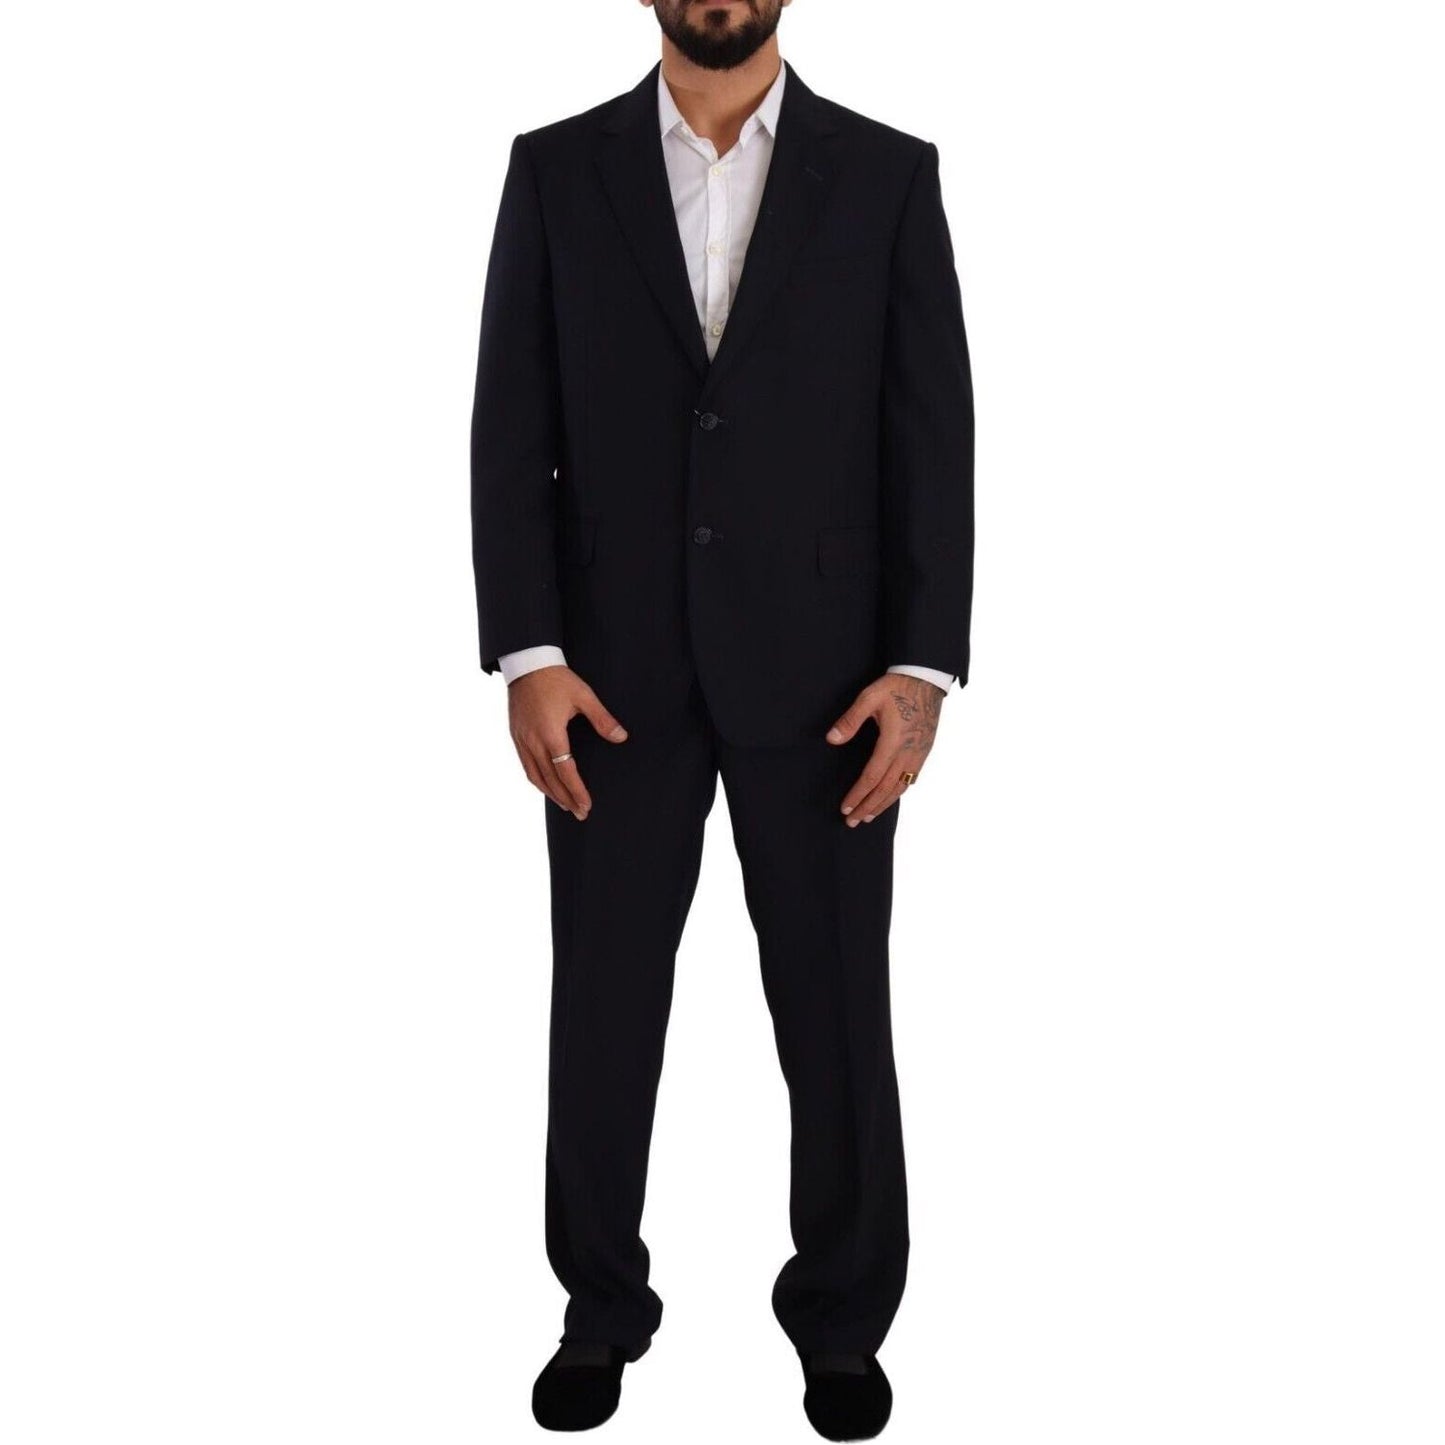 Domenico Tagliente Elegant Black Two-Piece Suit Ensemble blue-polyester-single-breasted-formal-suit-1 s-l1600-16-5-47f4329a-bde.jpg